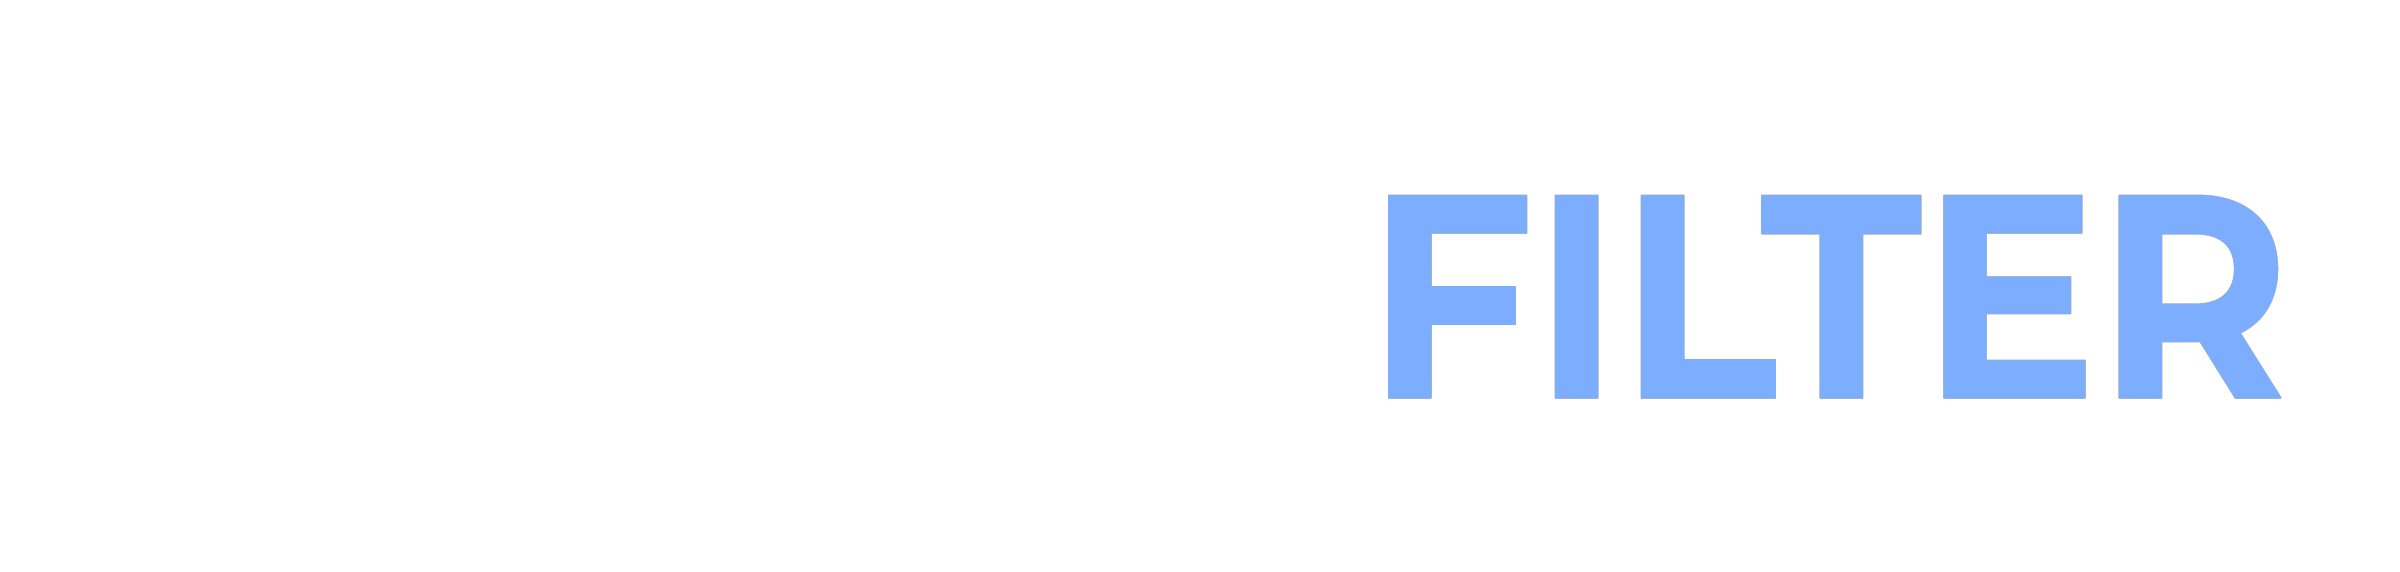 Post Filter